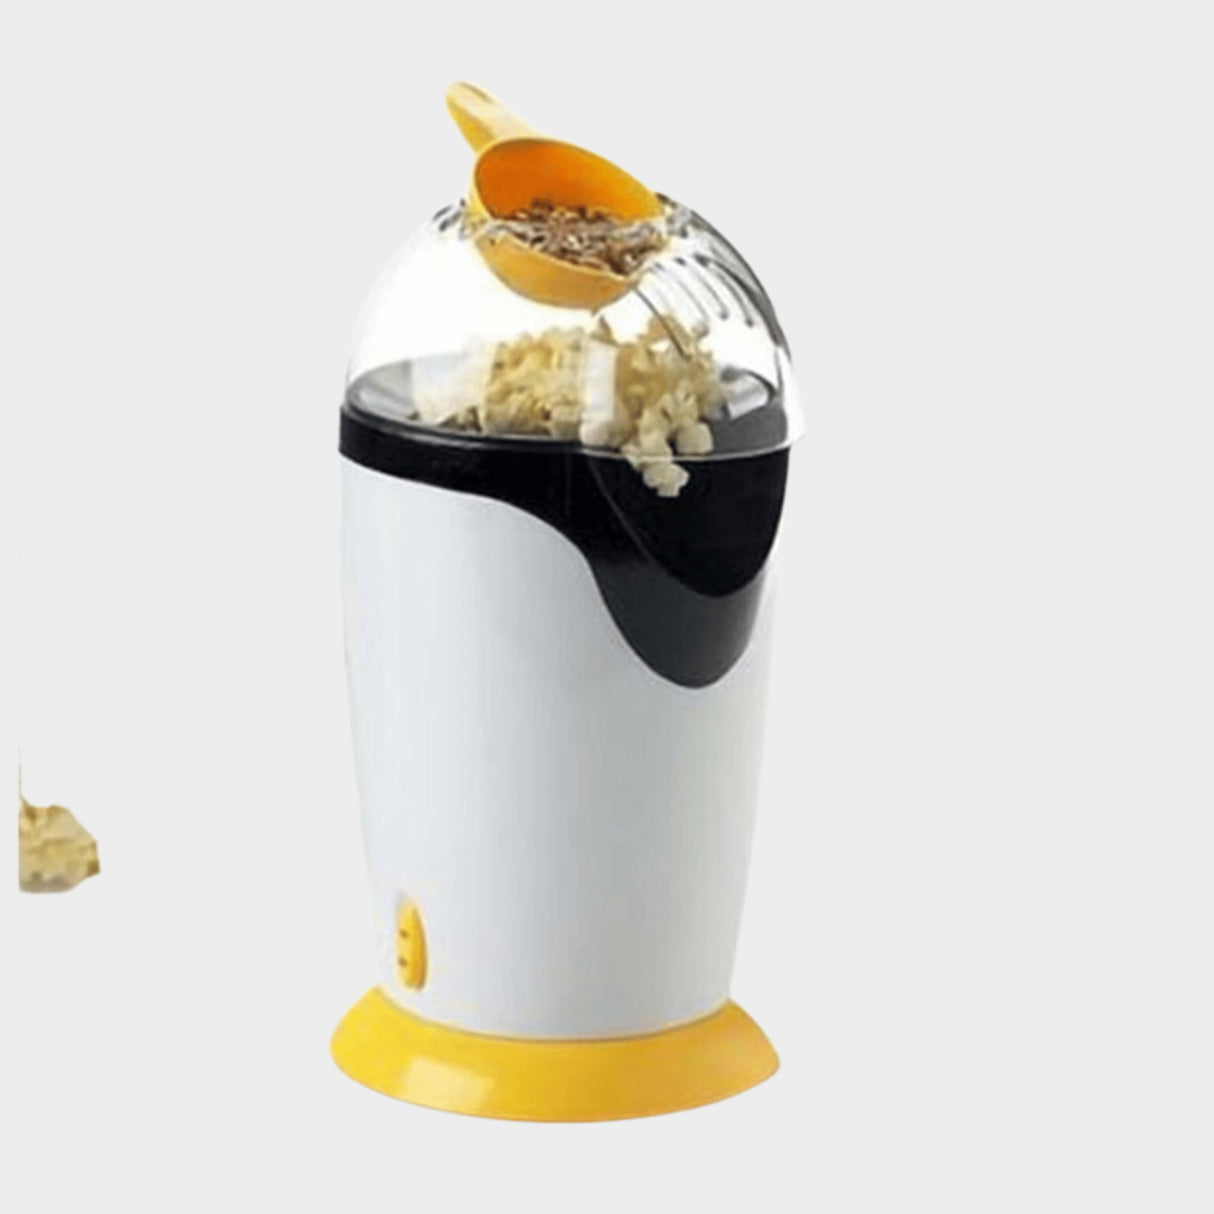 Relia Snack Maker, Popcorn Makers, Papad roaster - Cream - KWT Tech Mart